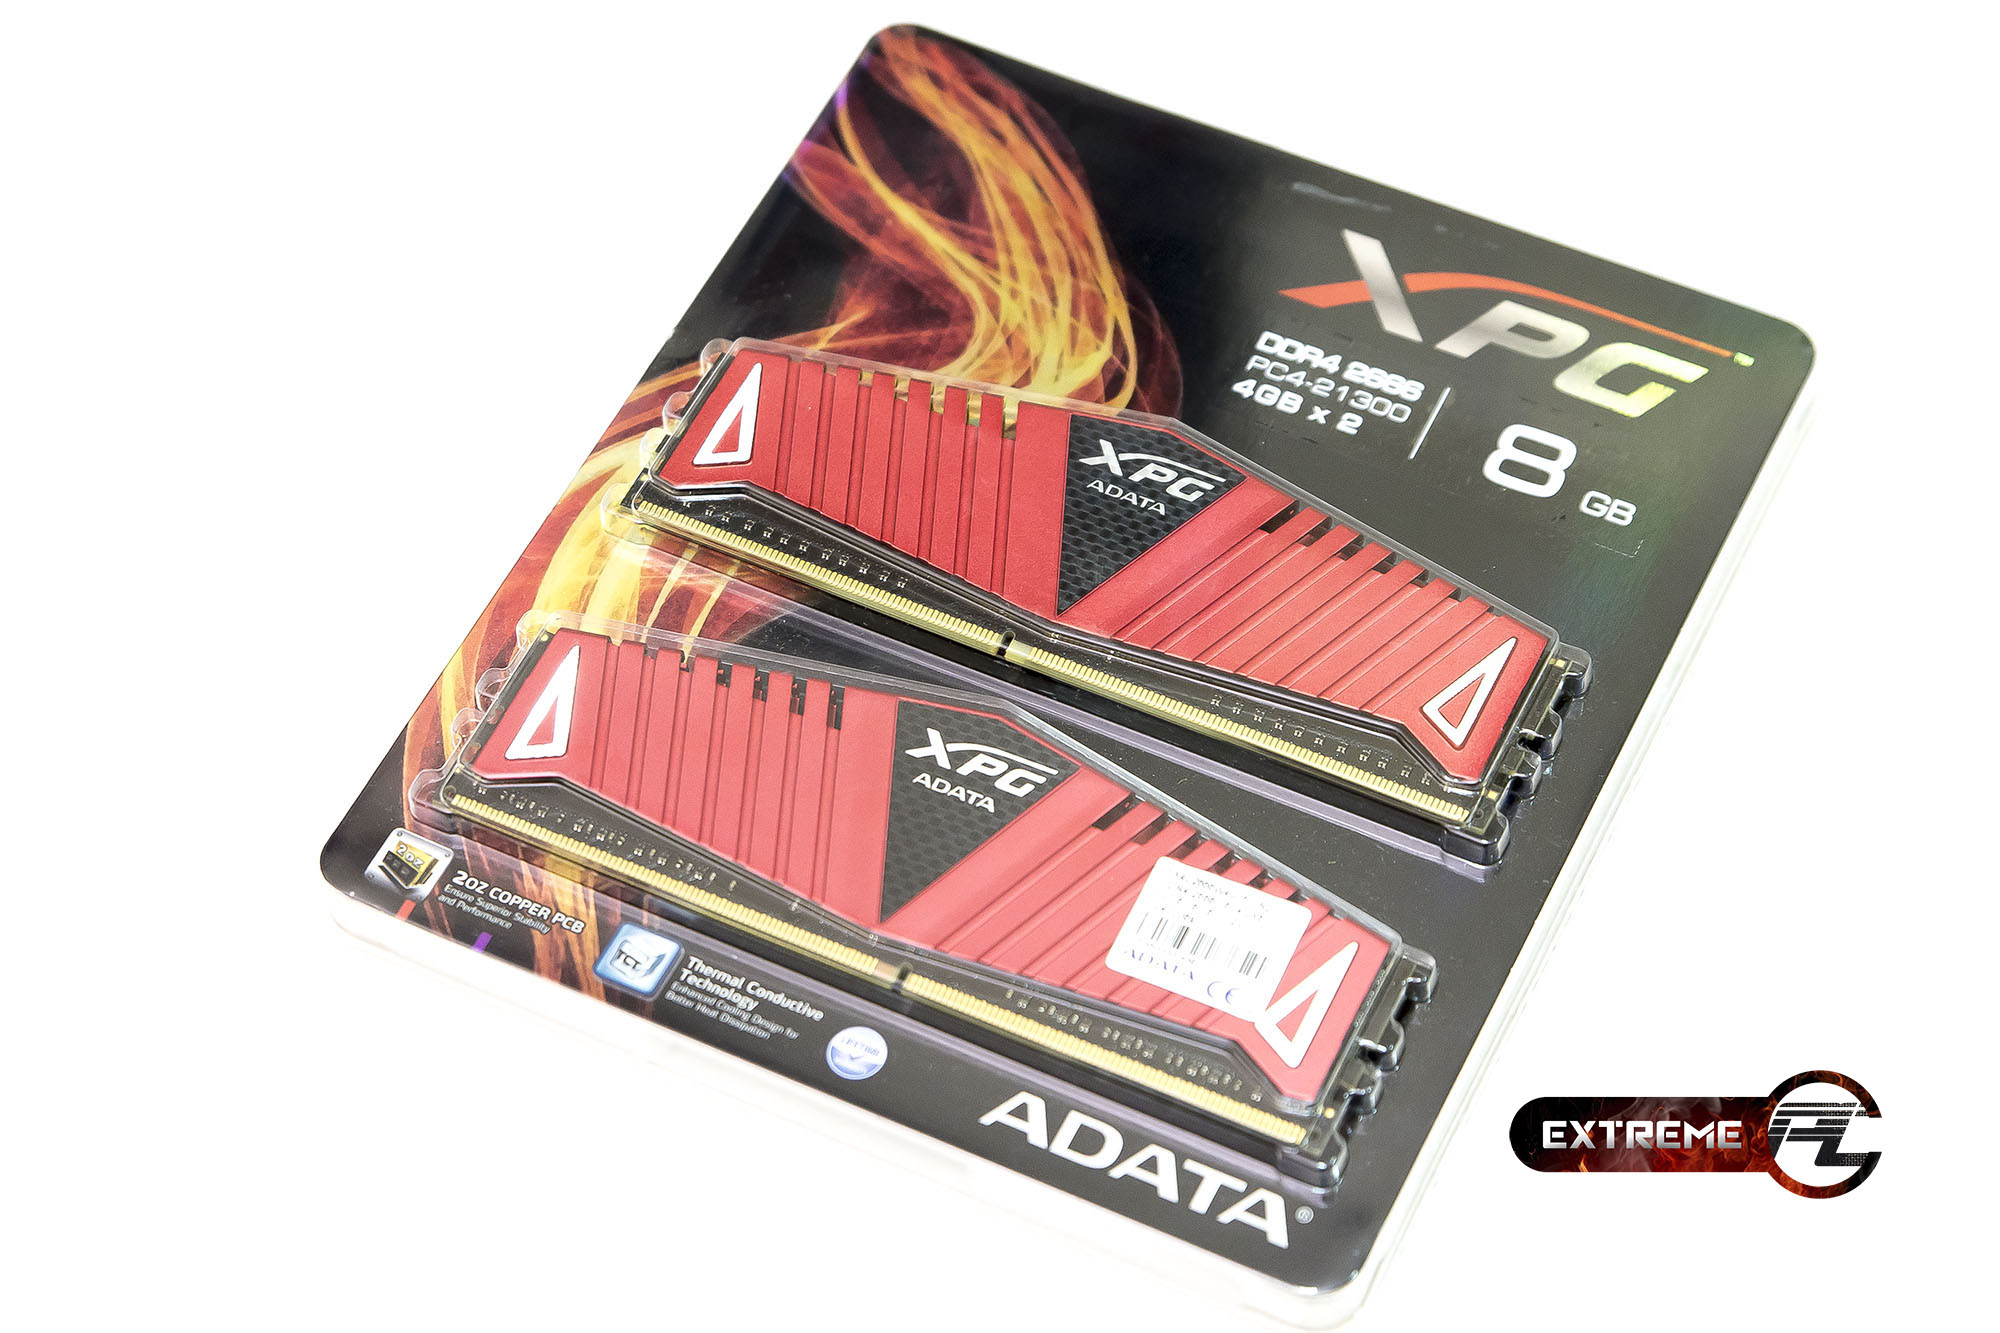 Review: ADATA XPG DDR4 2666 MHz 8 GB เมมโมรีที่ออกมาตอบโจทย์ทุกการใช้งาน